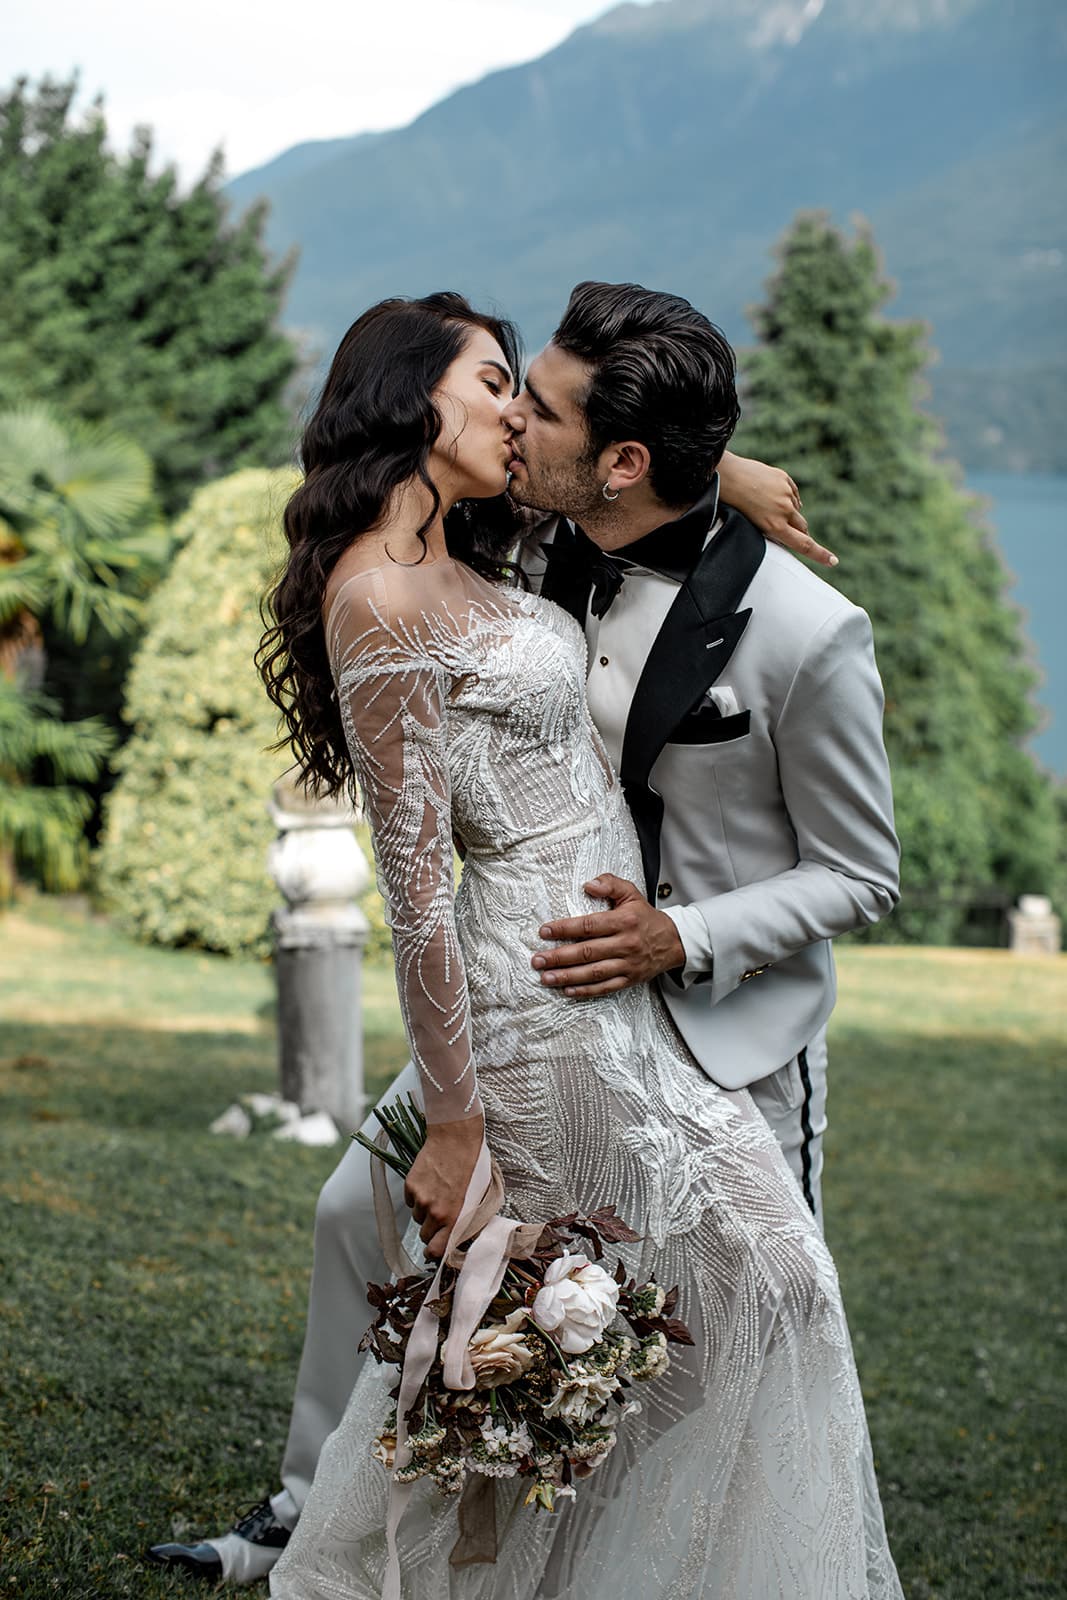 Groom kisses bride during intimate vow renewal celebration